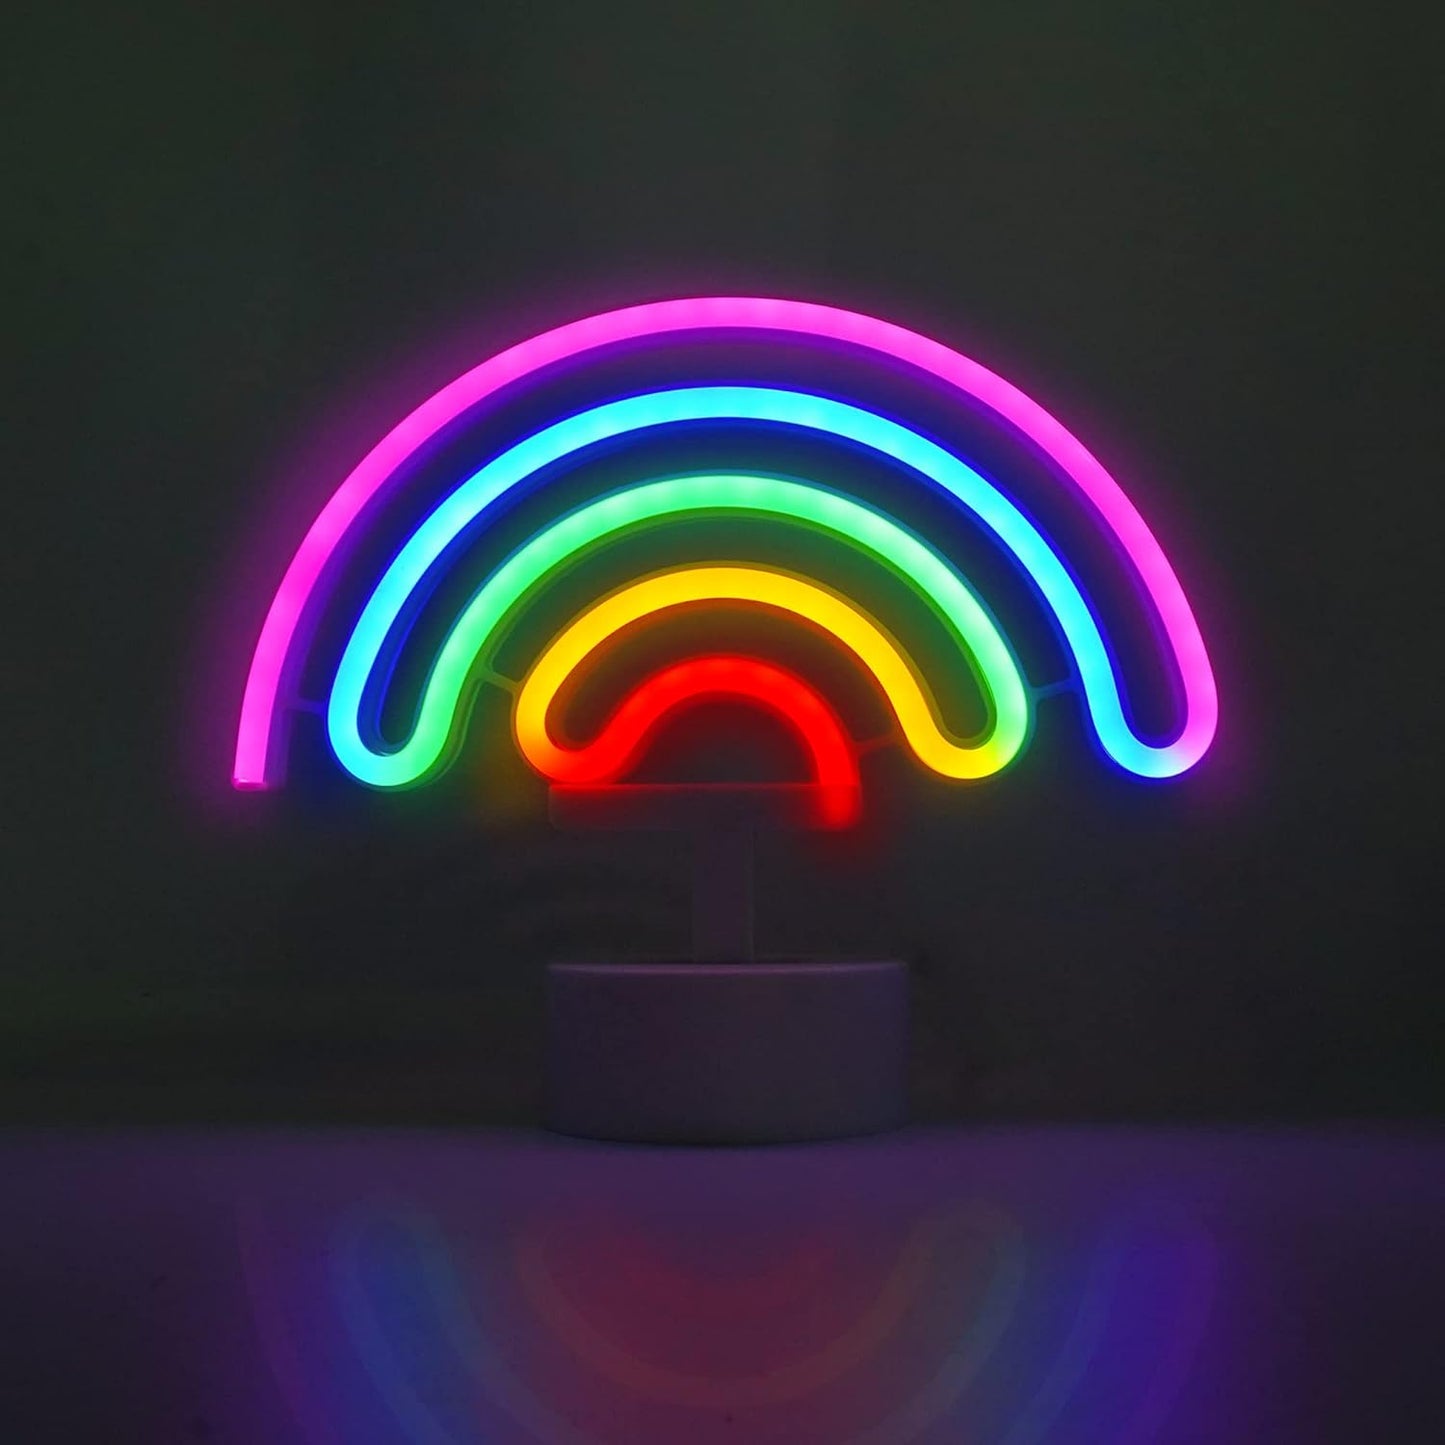 Rainbow LED Neon Light